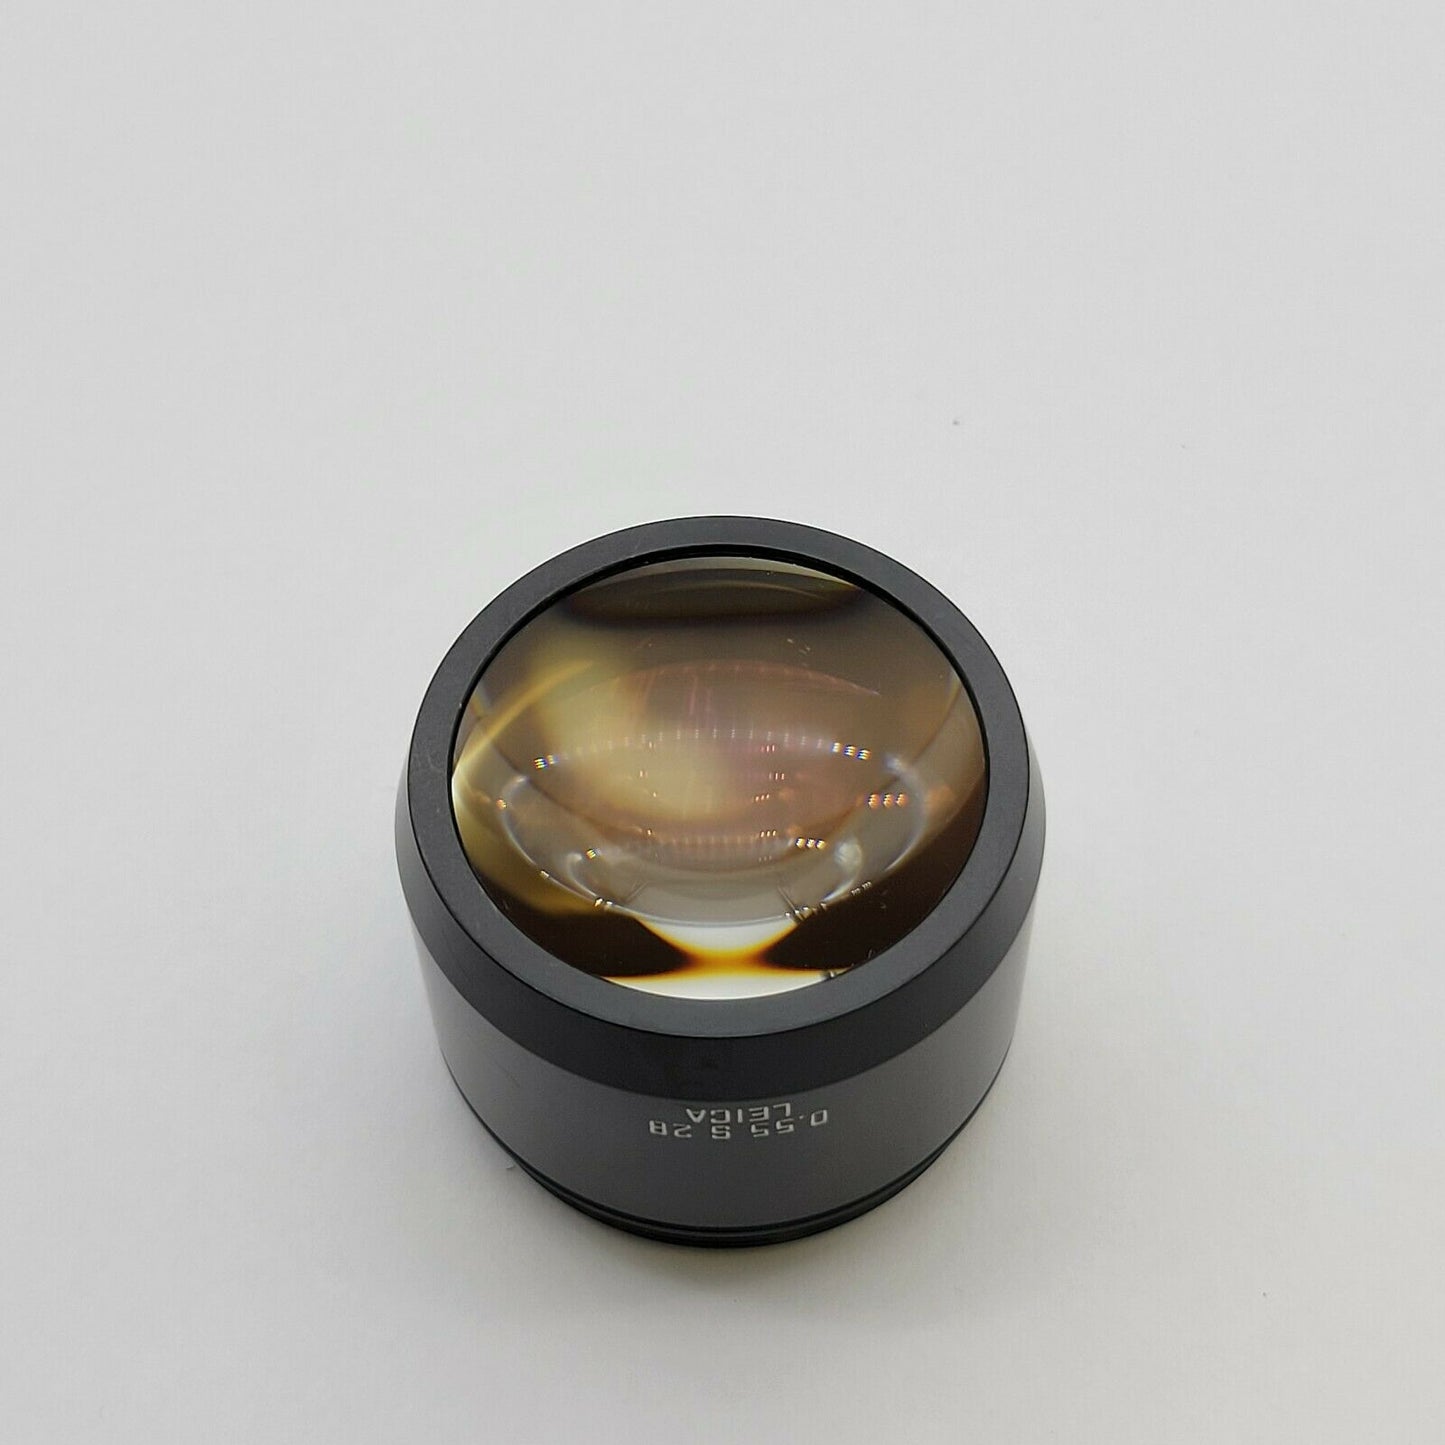 Leica Microscope Condenser Head Lens 0.55 S28 Article No. 505175 - microscopemarketplace